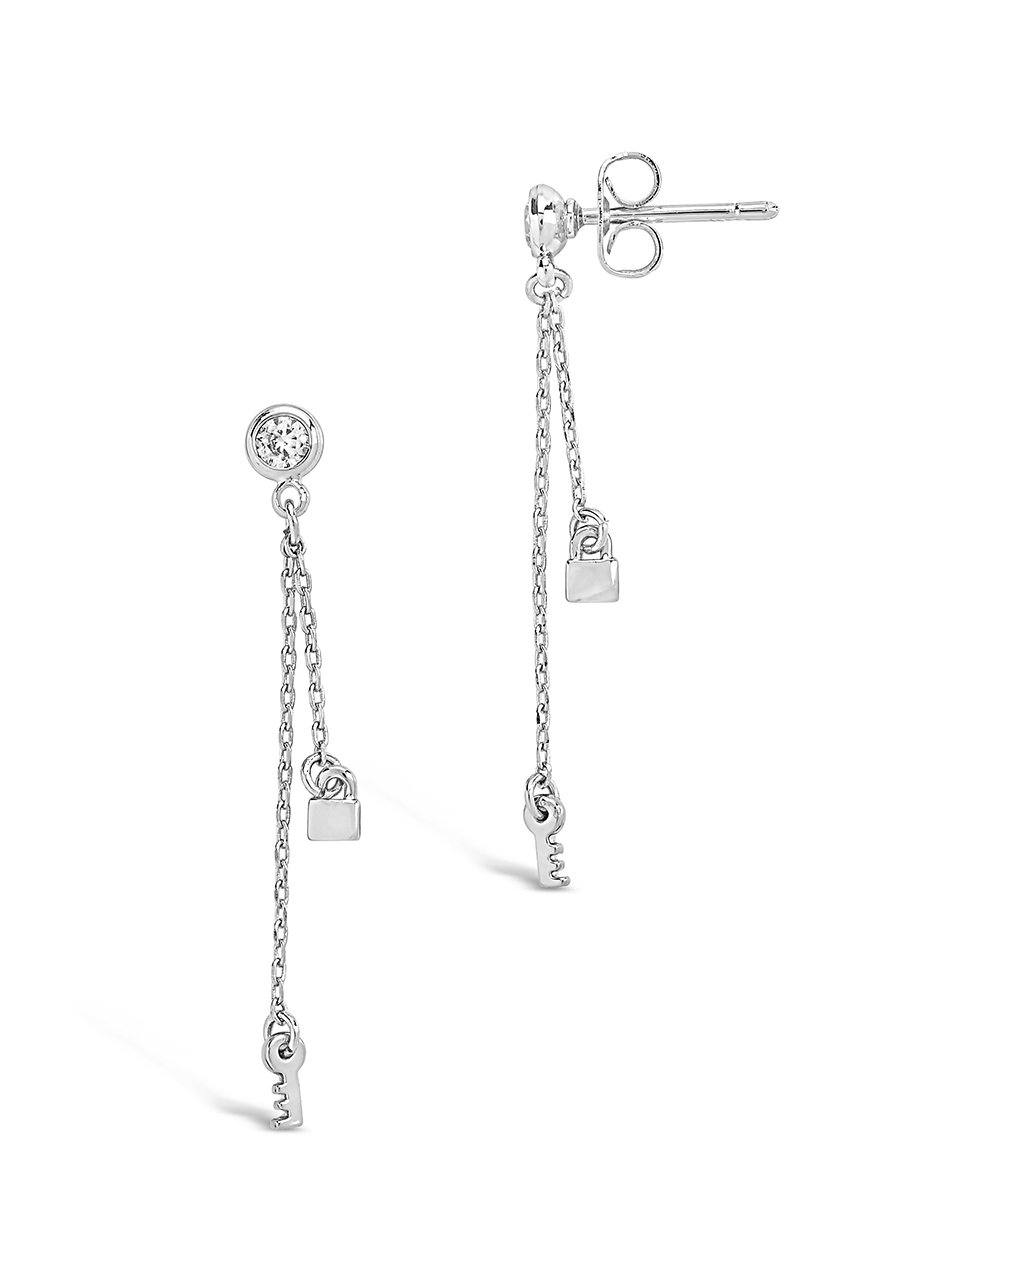 Silver Lock and Key Stud Earrings